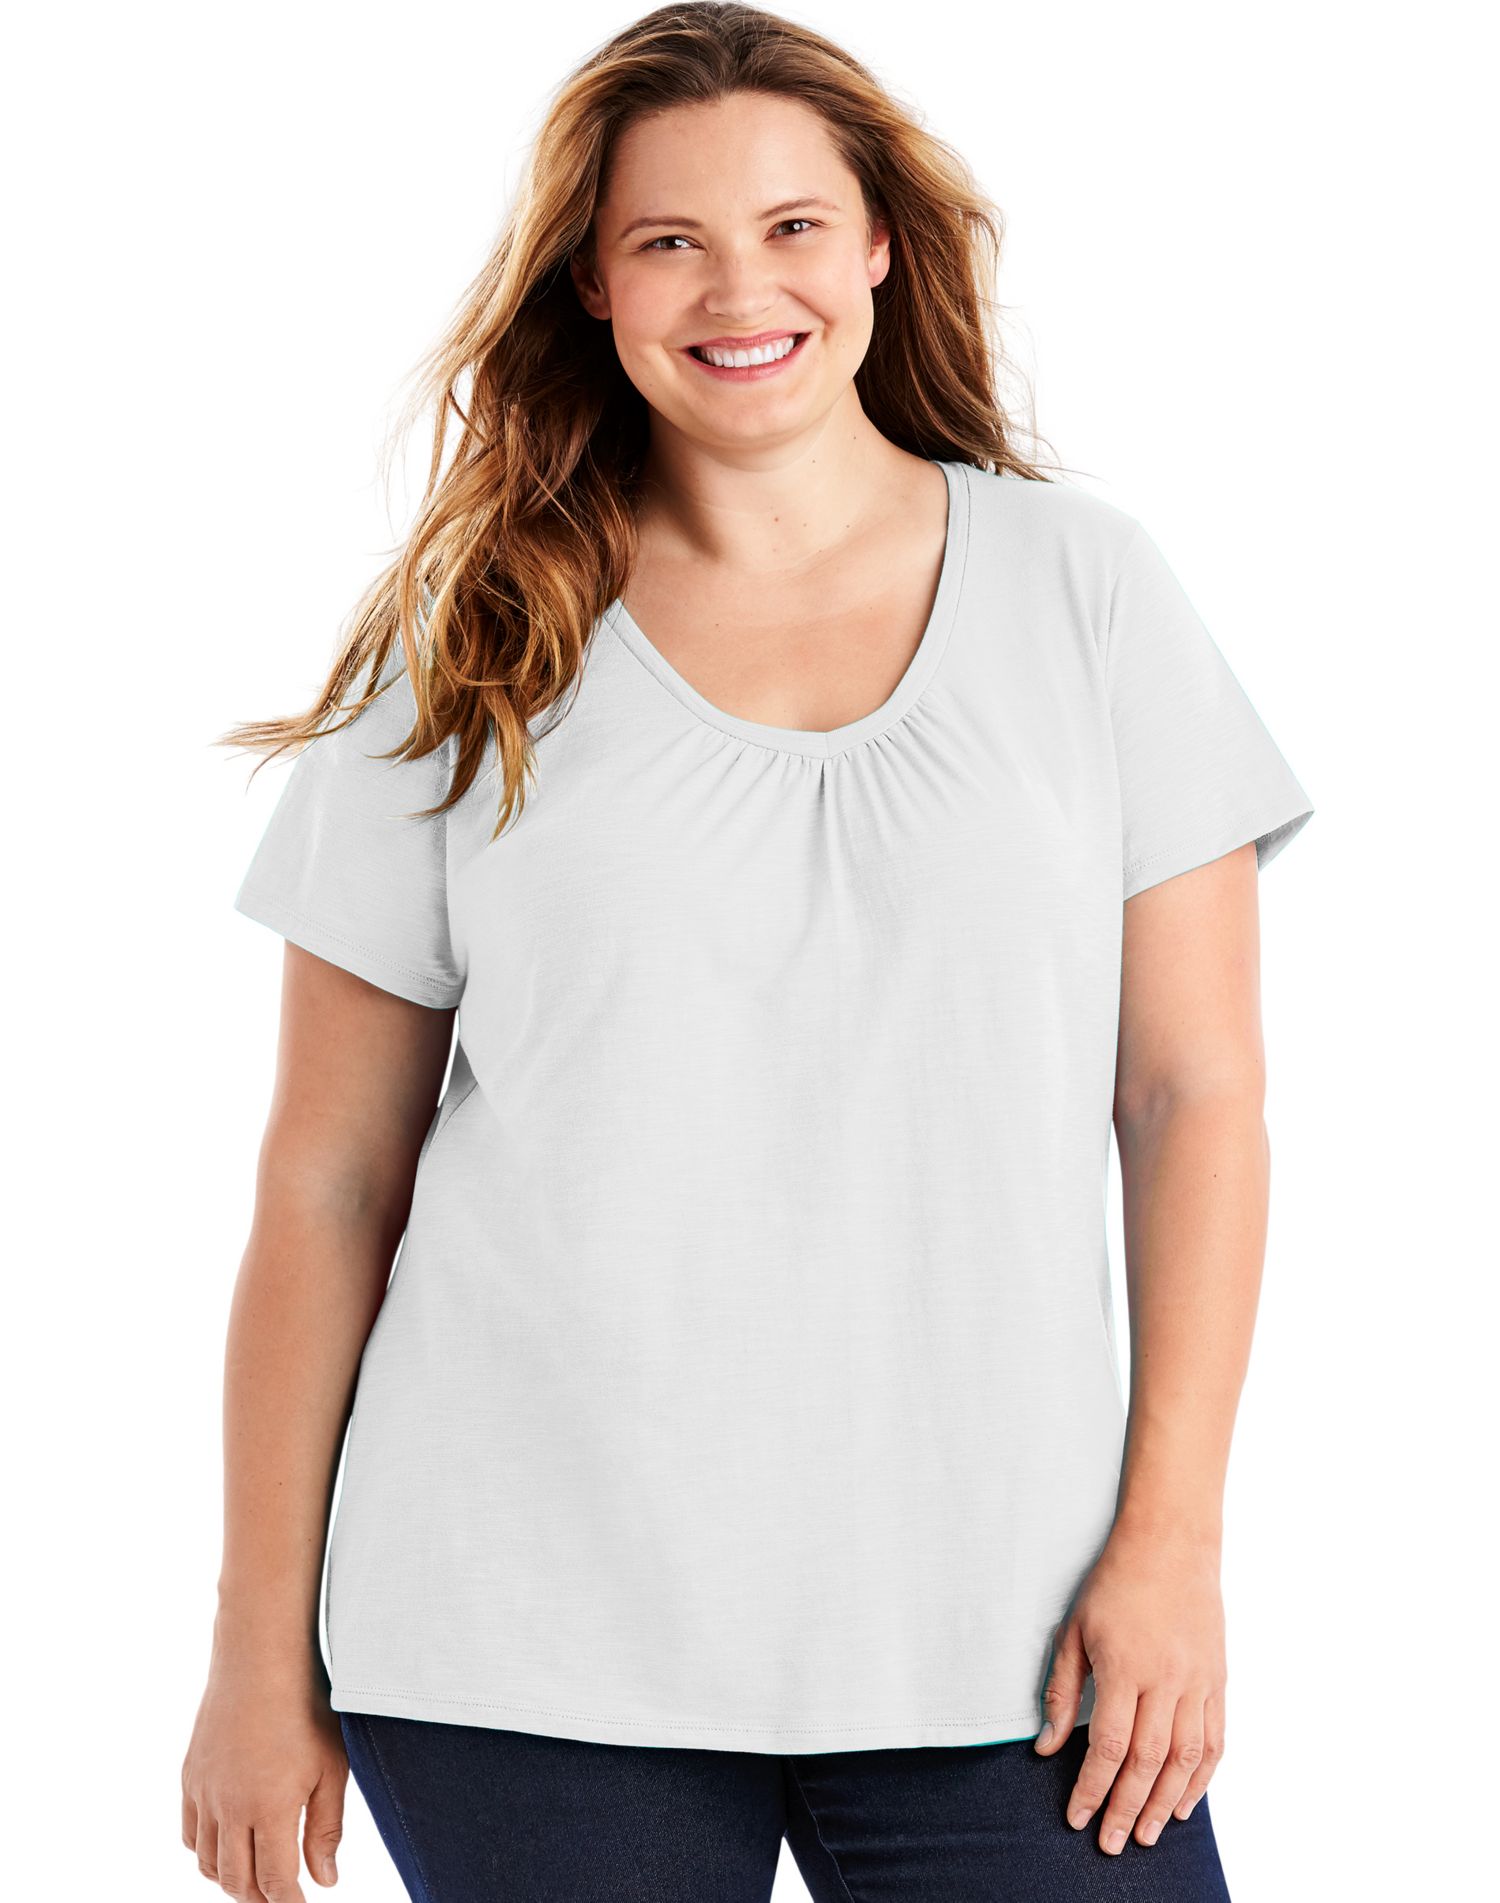 Hanes Women's Shirts, Slub Cotton Shirred V-Neck Tee, Cotton T